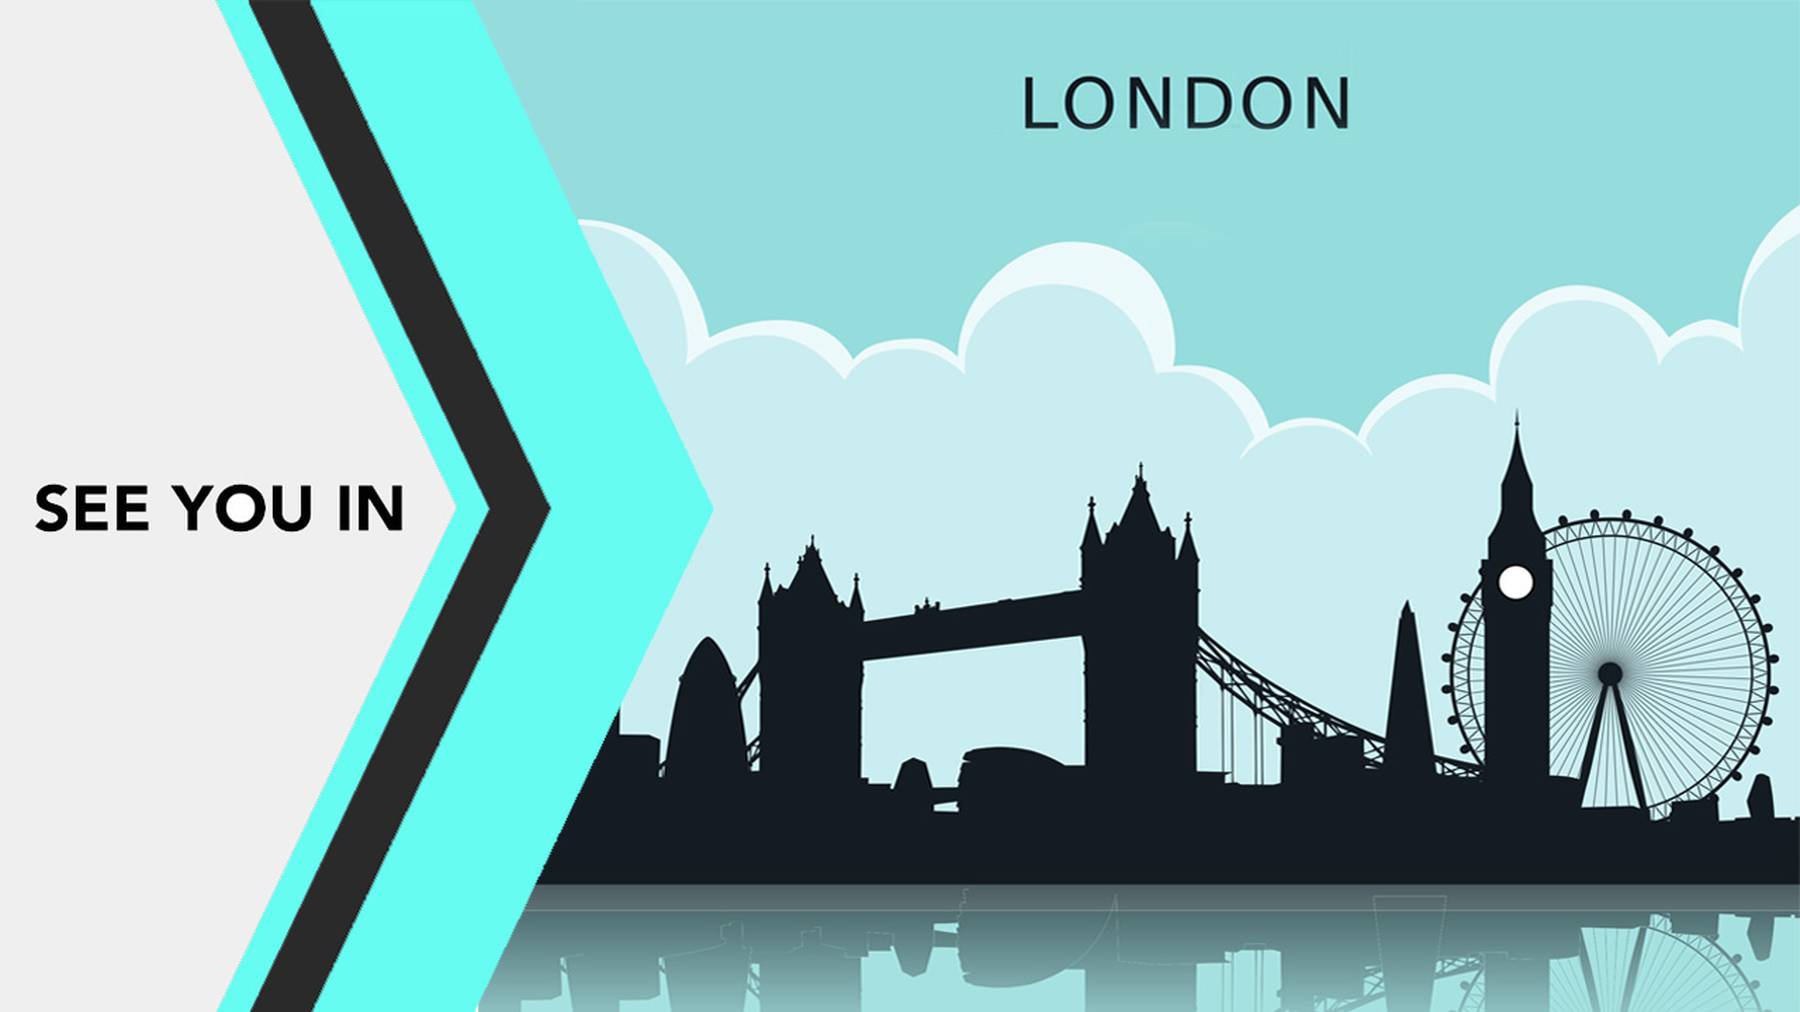 AI Fraud and AML Summit London 2020